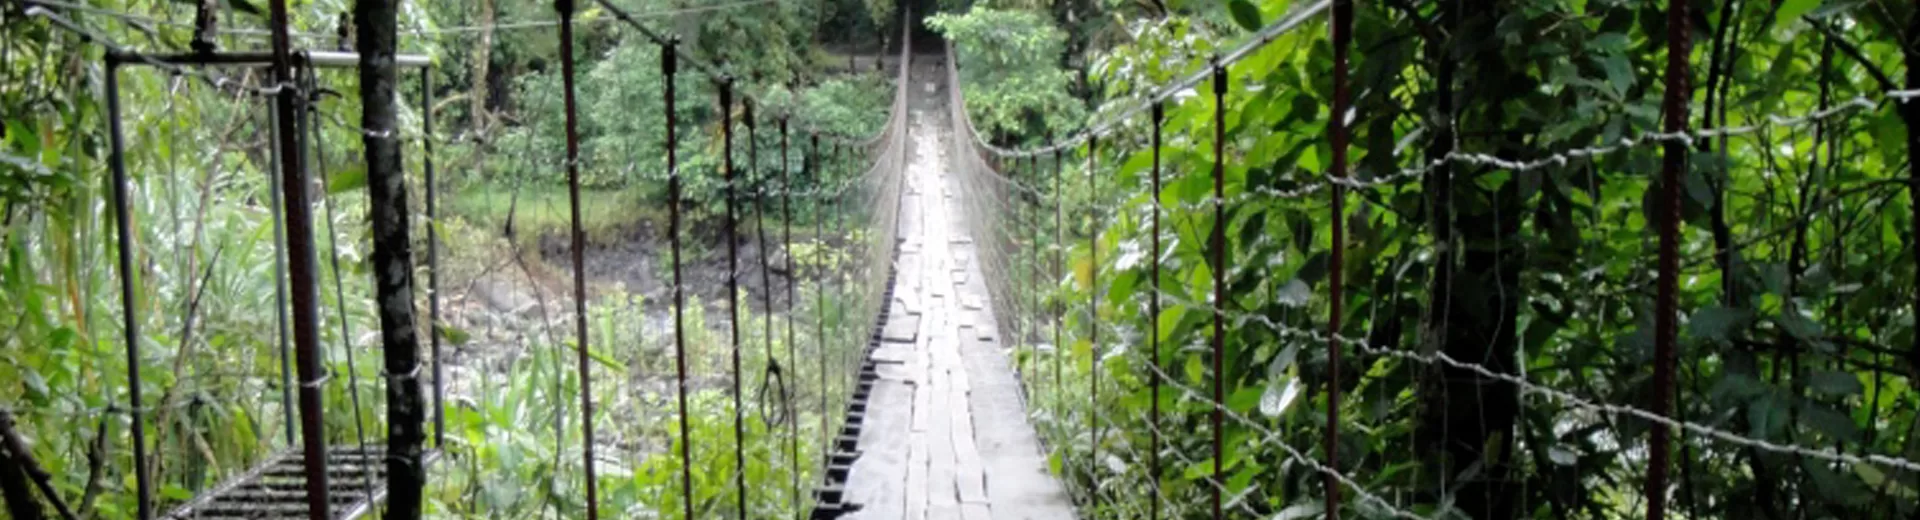 wooden suspension bridge over river